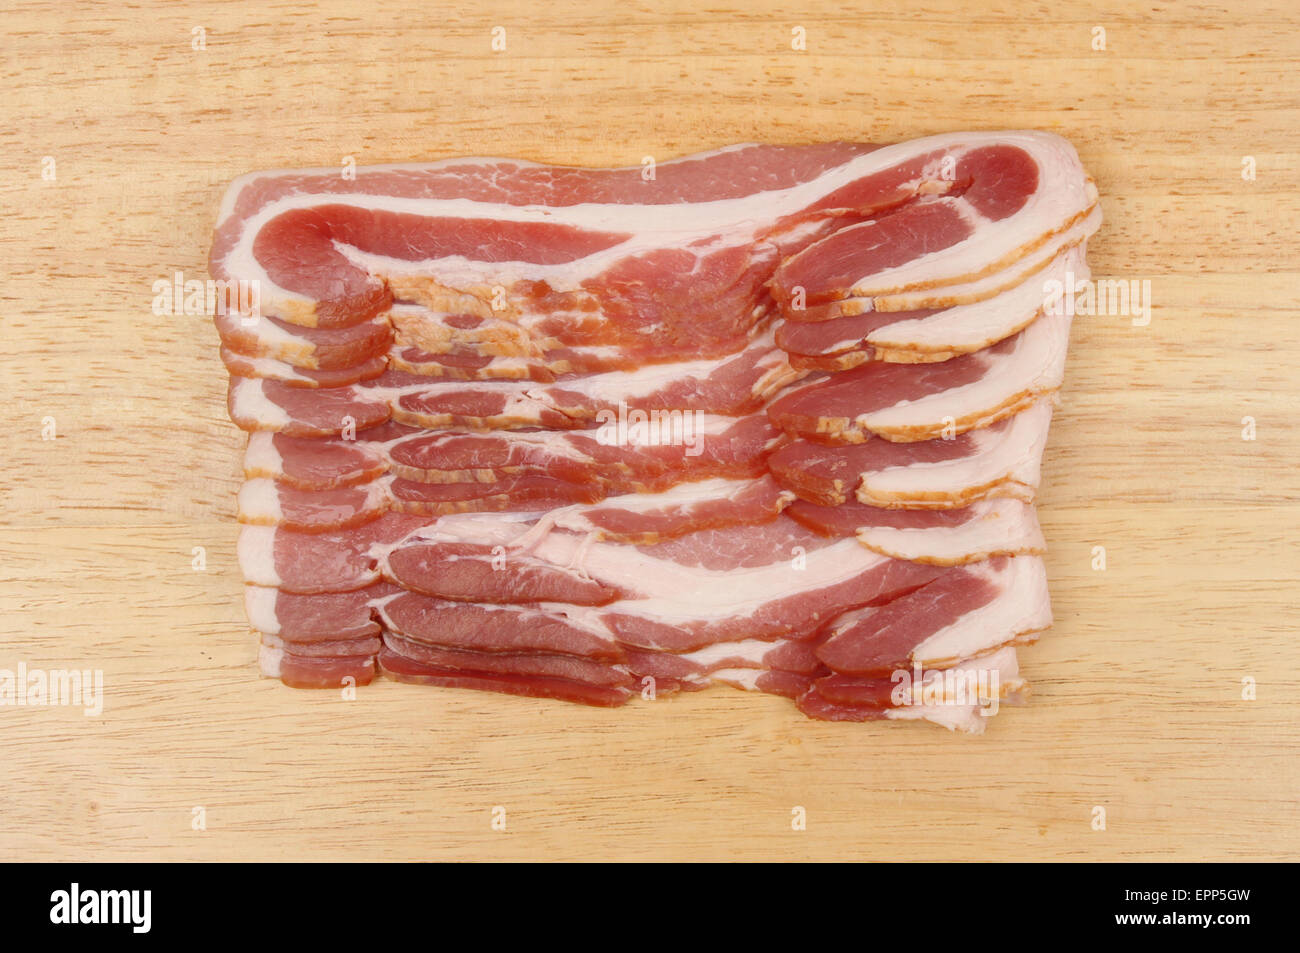 Rashers of streaky bacon on a wooden board Stock Photo